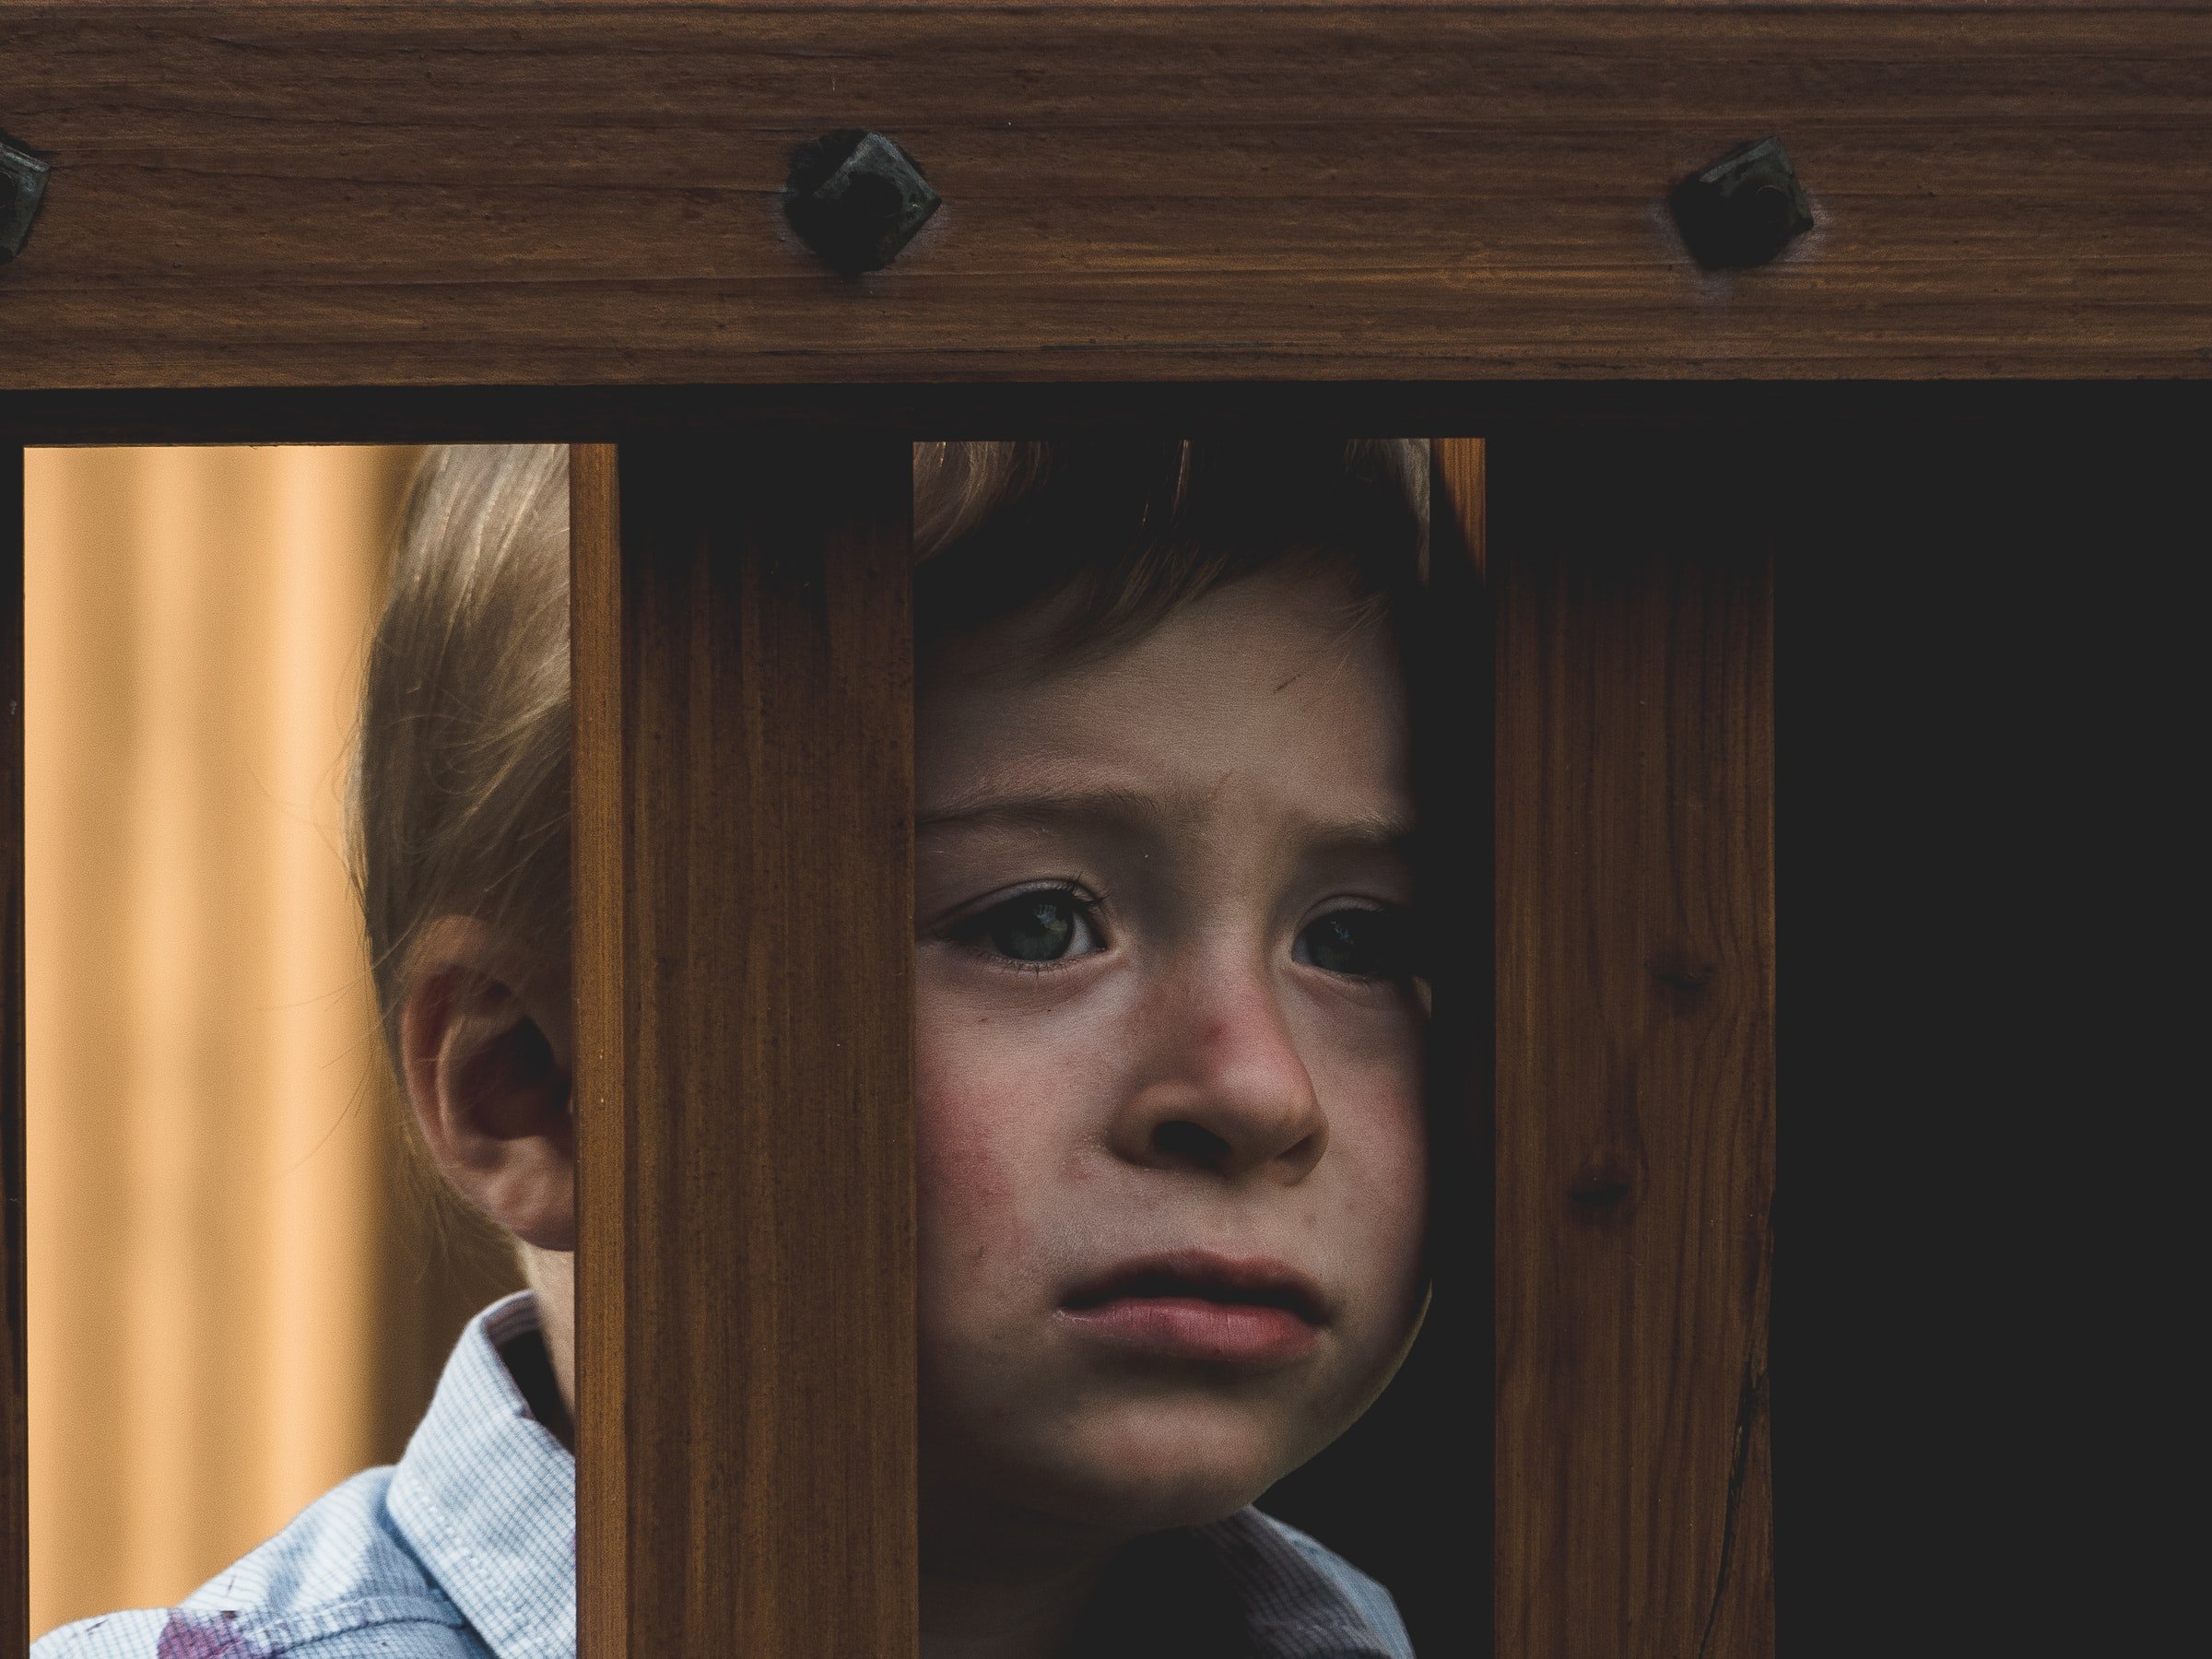 Boy leaning on a wooden railing. | Source: Unsplash